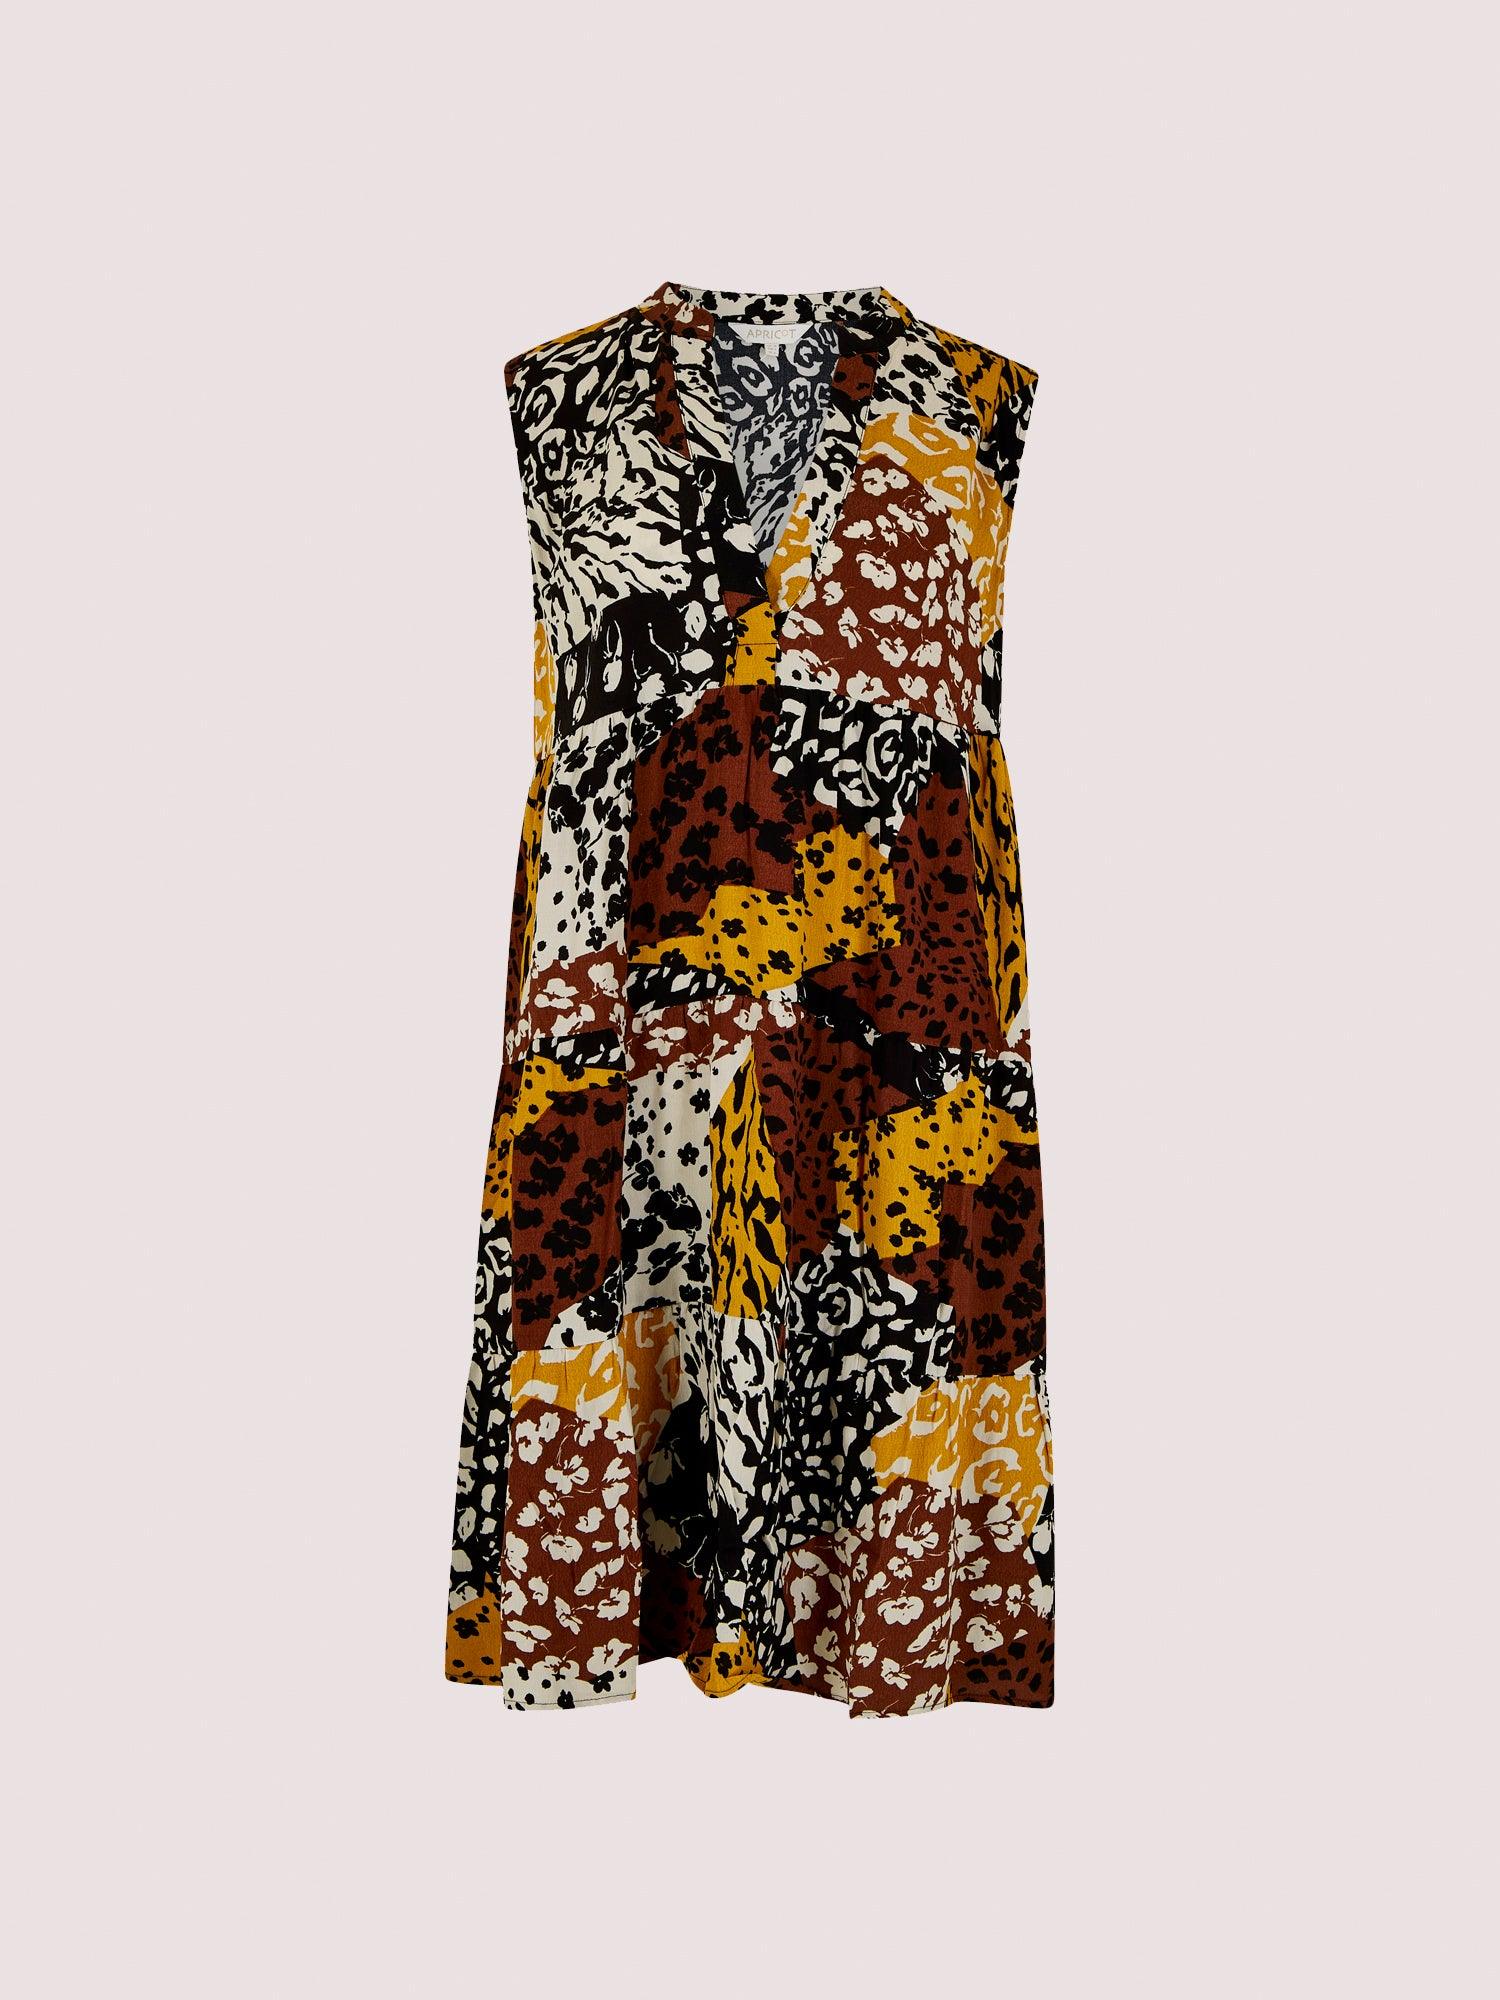 APRICOT - שמלת מיני עם הדפס בגווני חום - MASHBIR//365